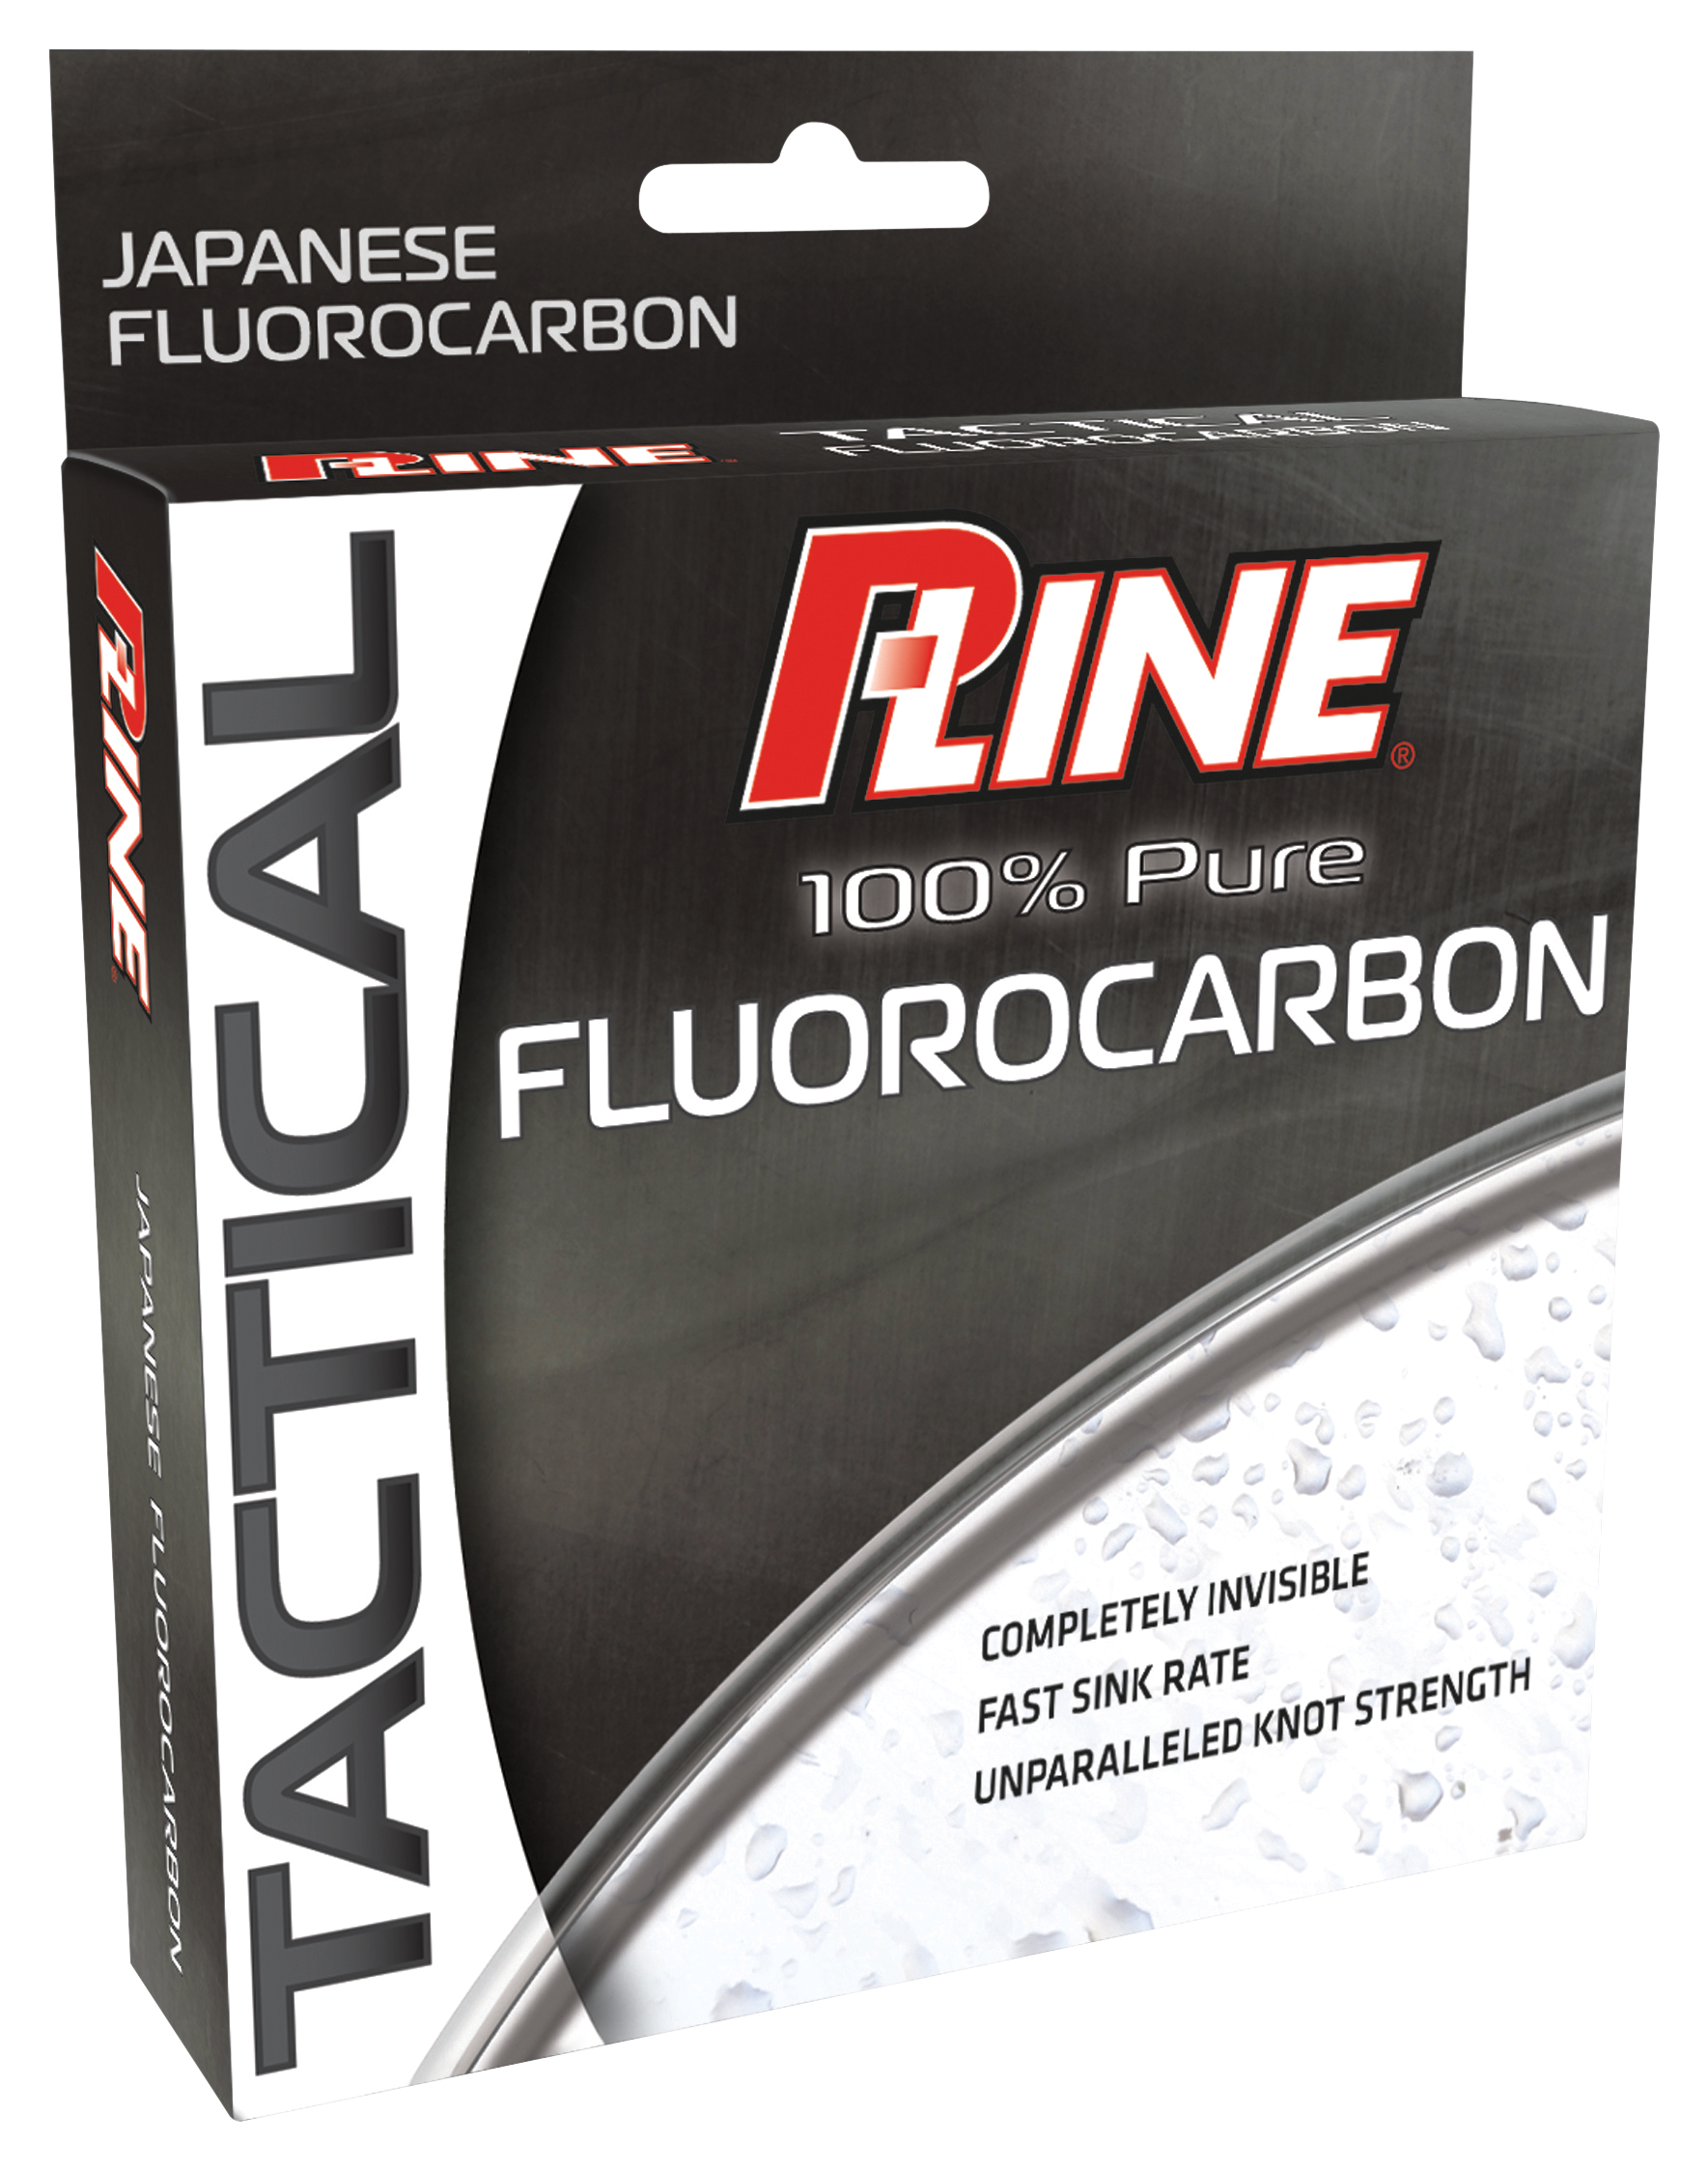 P-Line® Floroclear 10 lb. - 300 yards Fluorocarbon Fishing Line